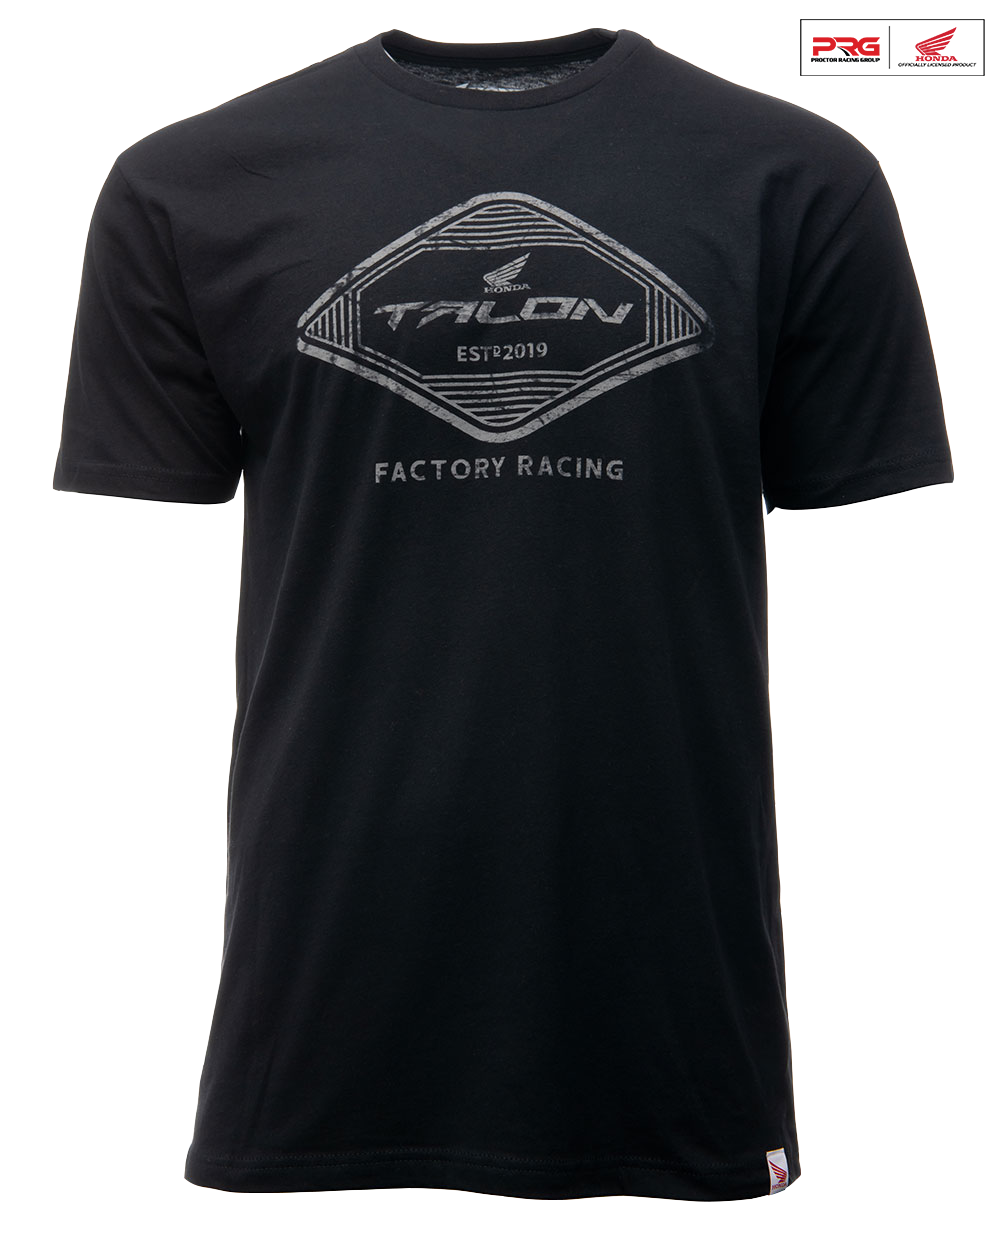 Talon Factory Racing Premium Black Tee